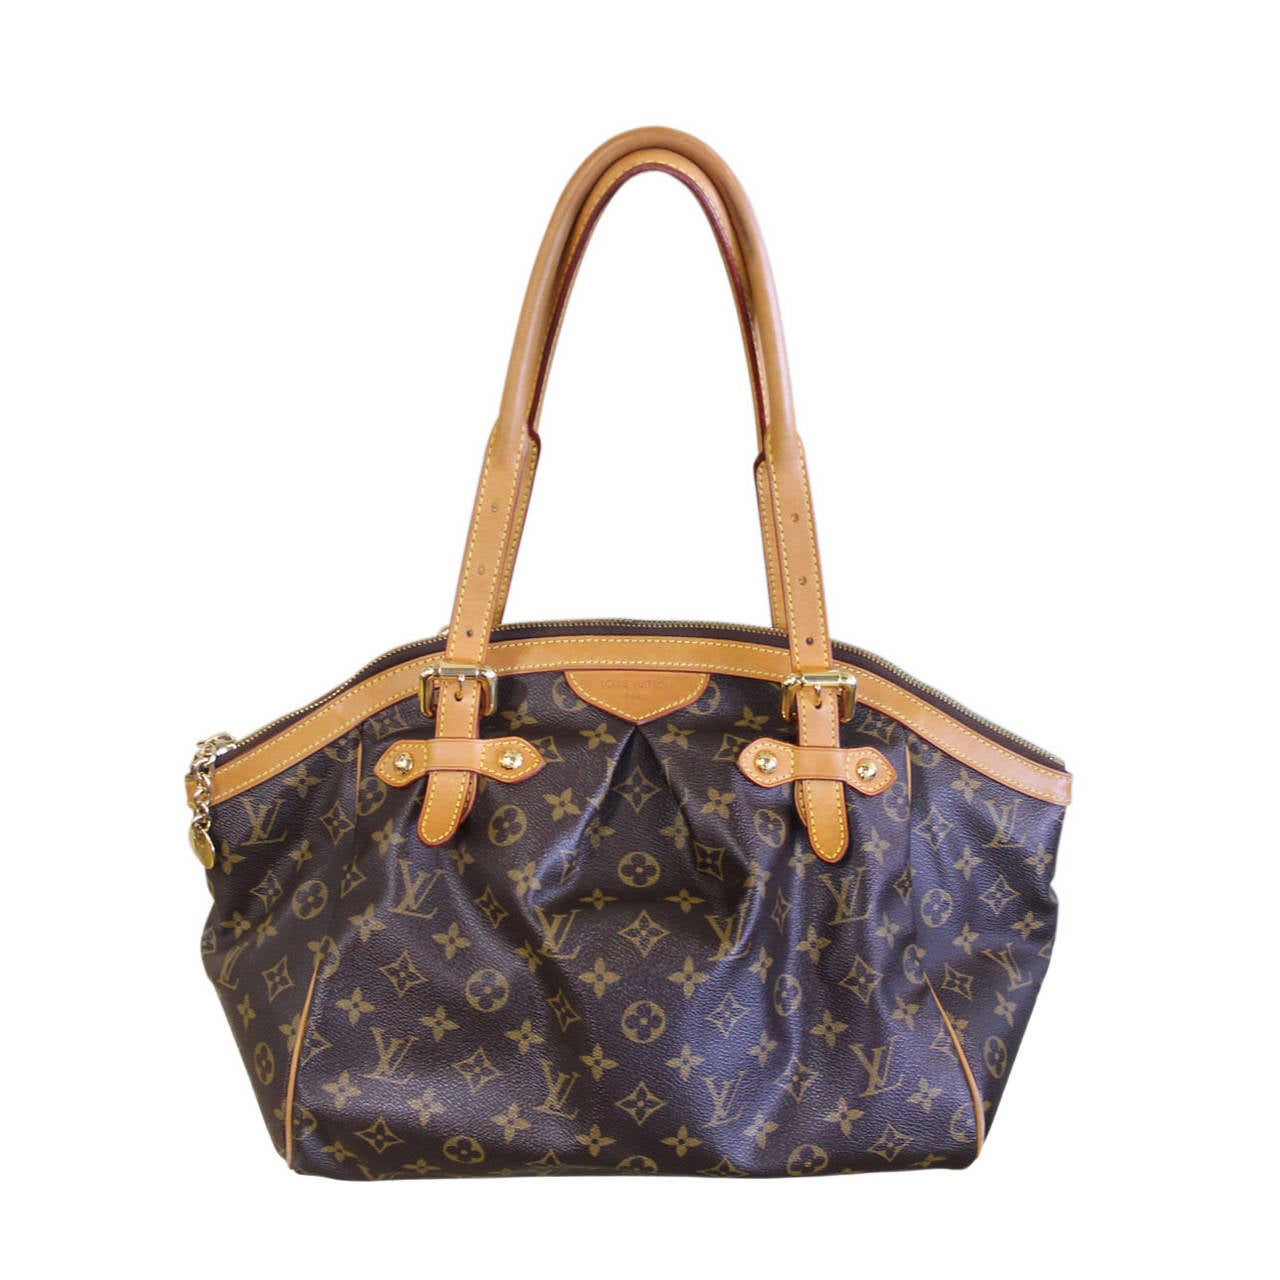 Louis Vuitton Tivoli GM Monogram Canvas Shoulder Bag in Box at 1stdibs